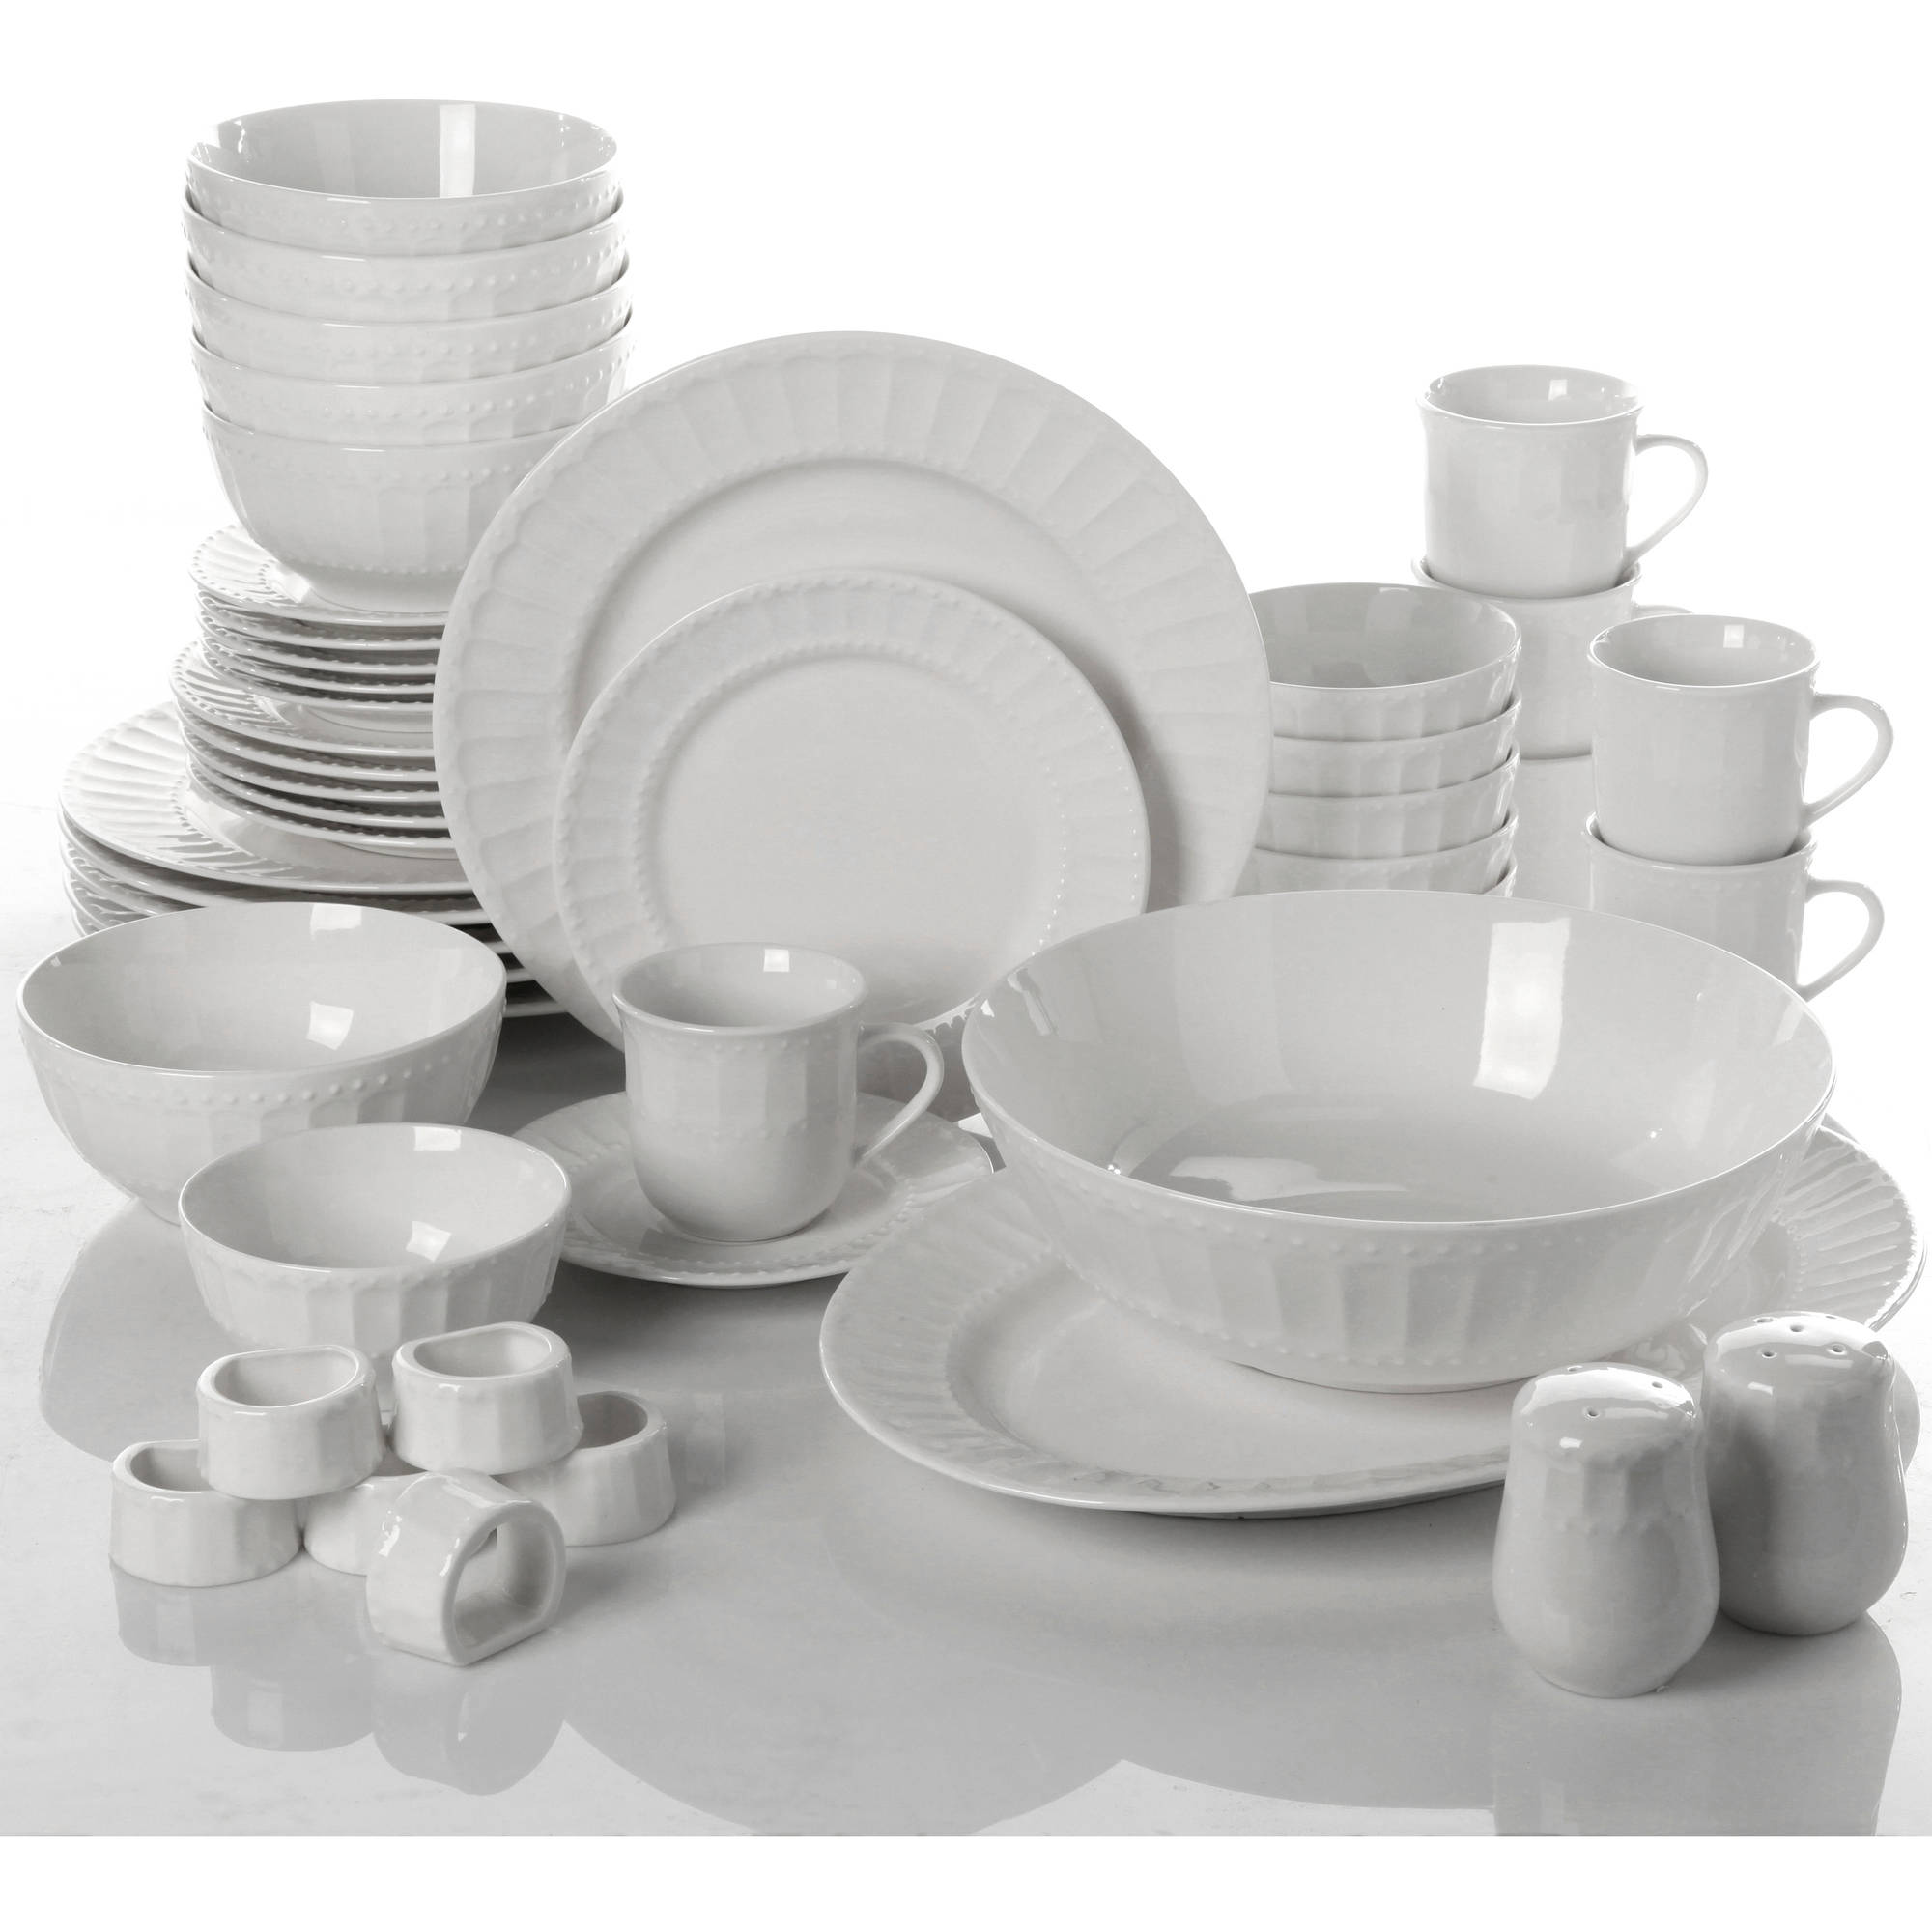  Gibson Home Regalia 46-Piece Dinnerware and Serve ware Set, Service for 6